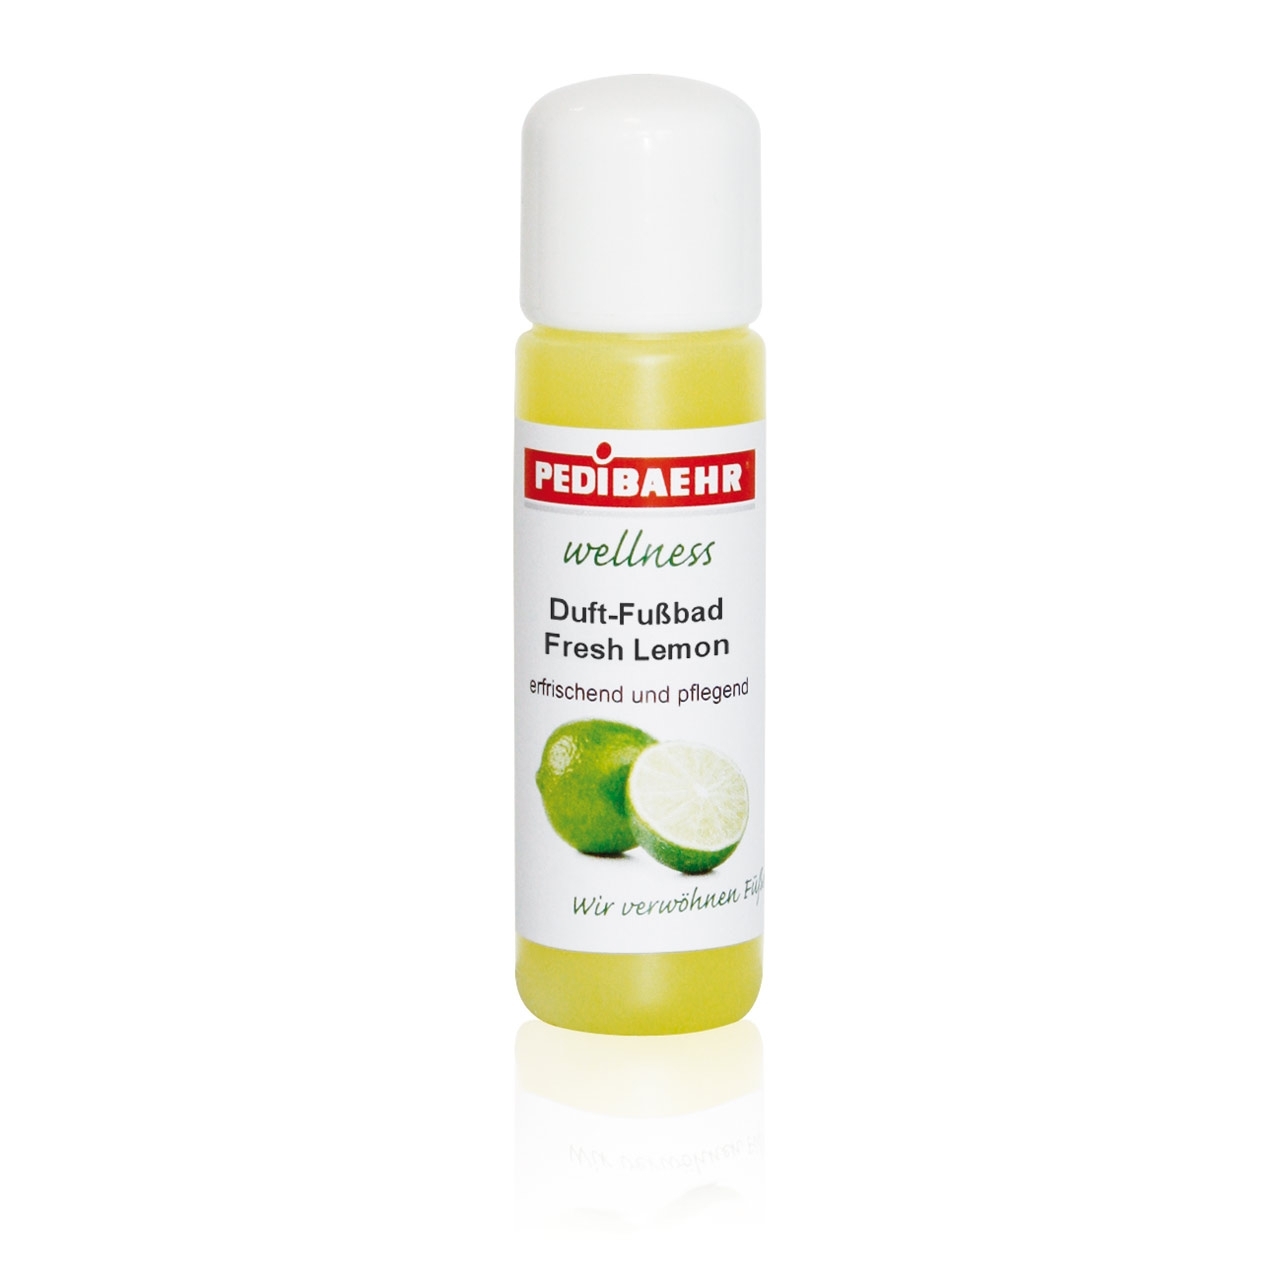 PEDIBAEHR Wellness Duft-Fußbad Fresh Lemon 50 ml